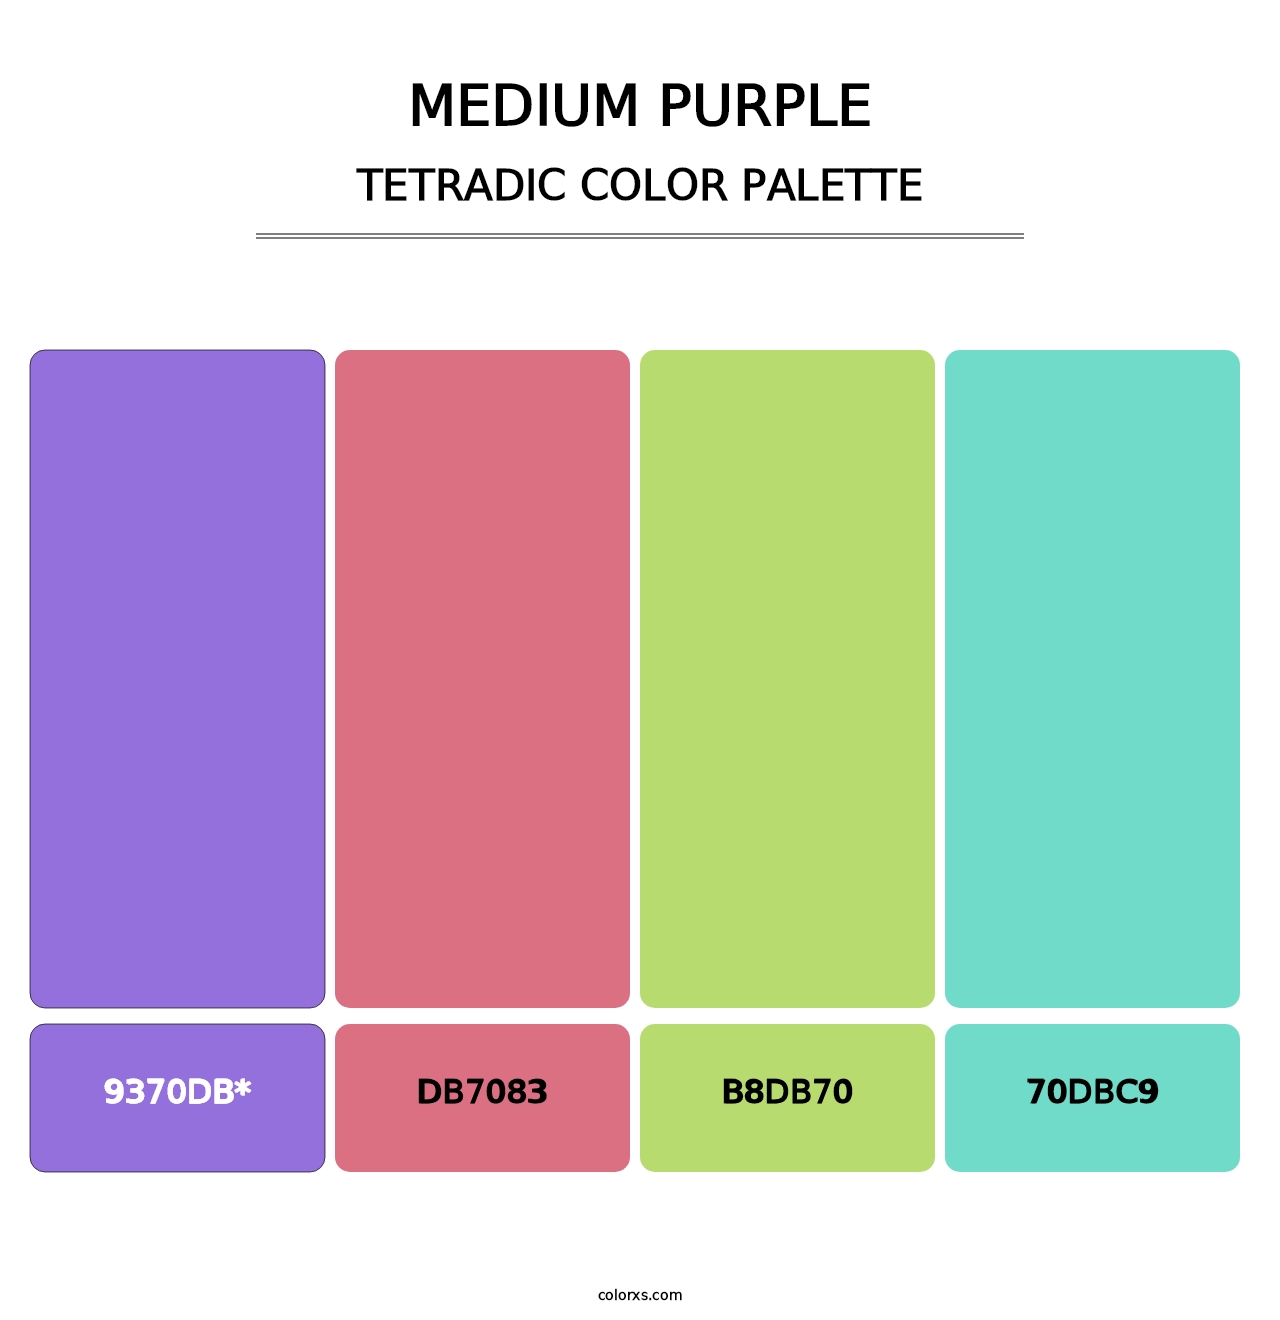 Medium Purple - Tetradic Color Palette